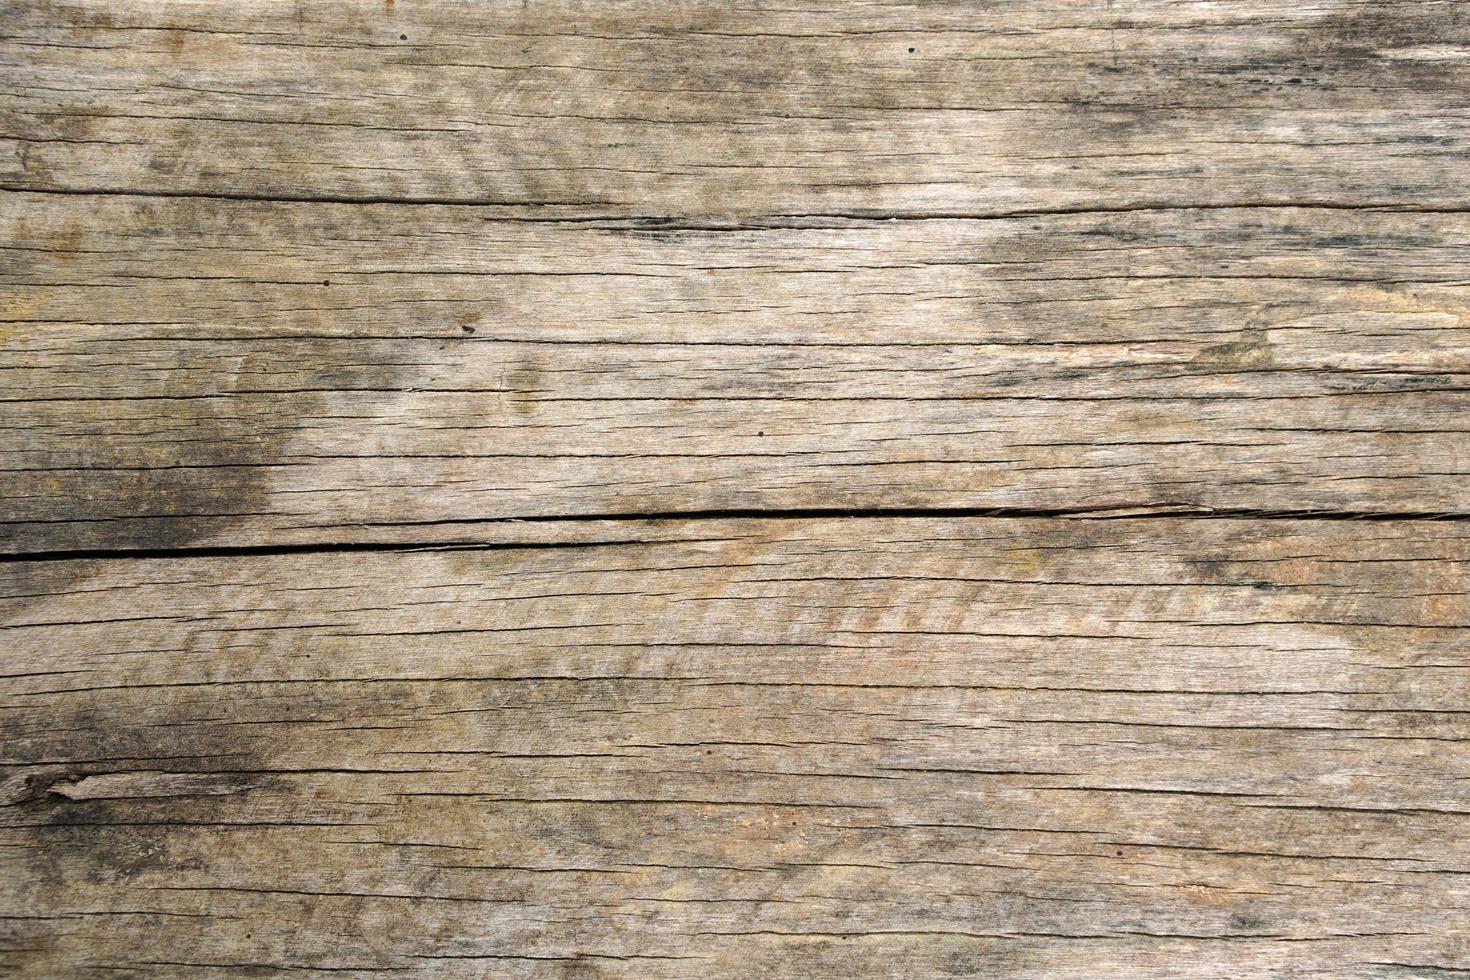 background pattern on wooden floor photo